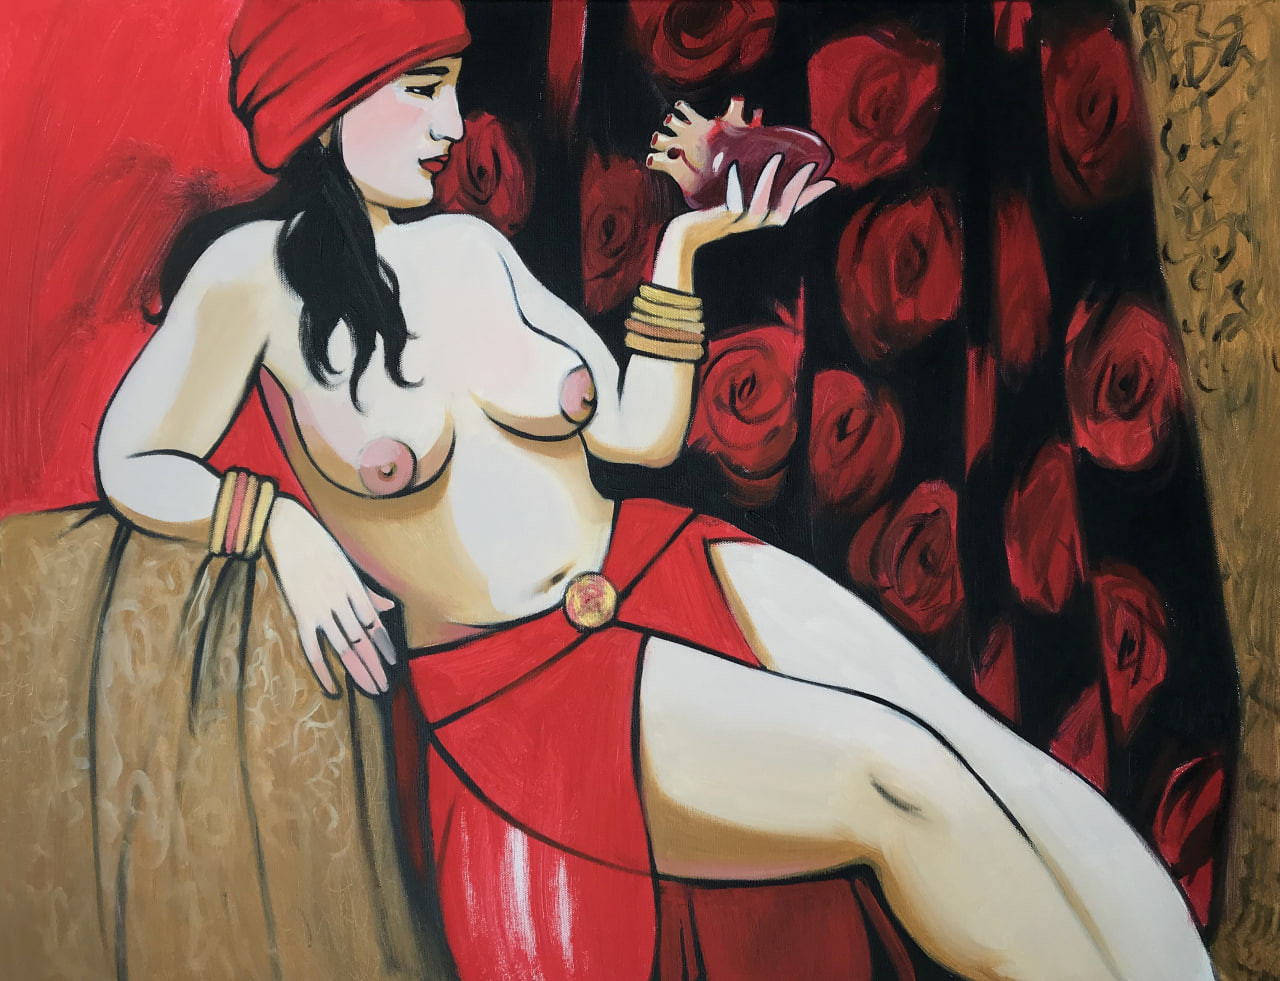 Dina Kalinkina, “For dessert”, acrylic, canvas, 70×90 cm, 2020